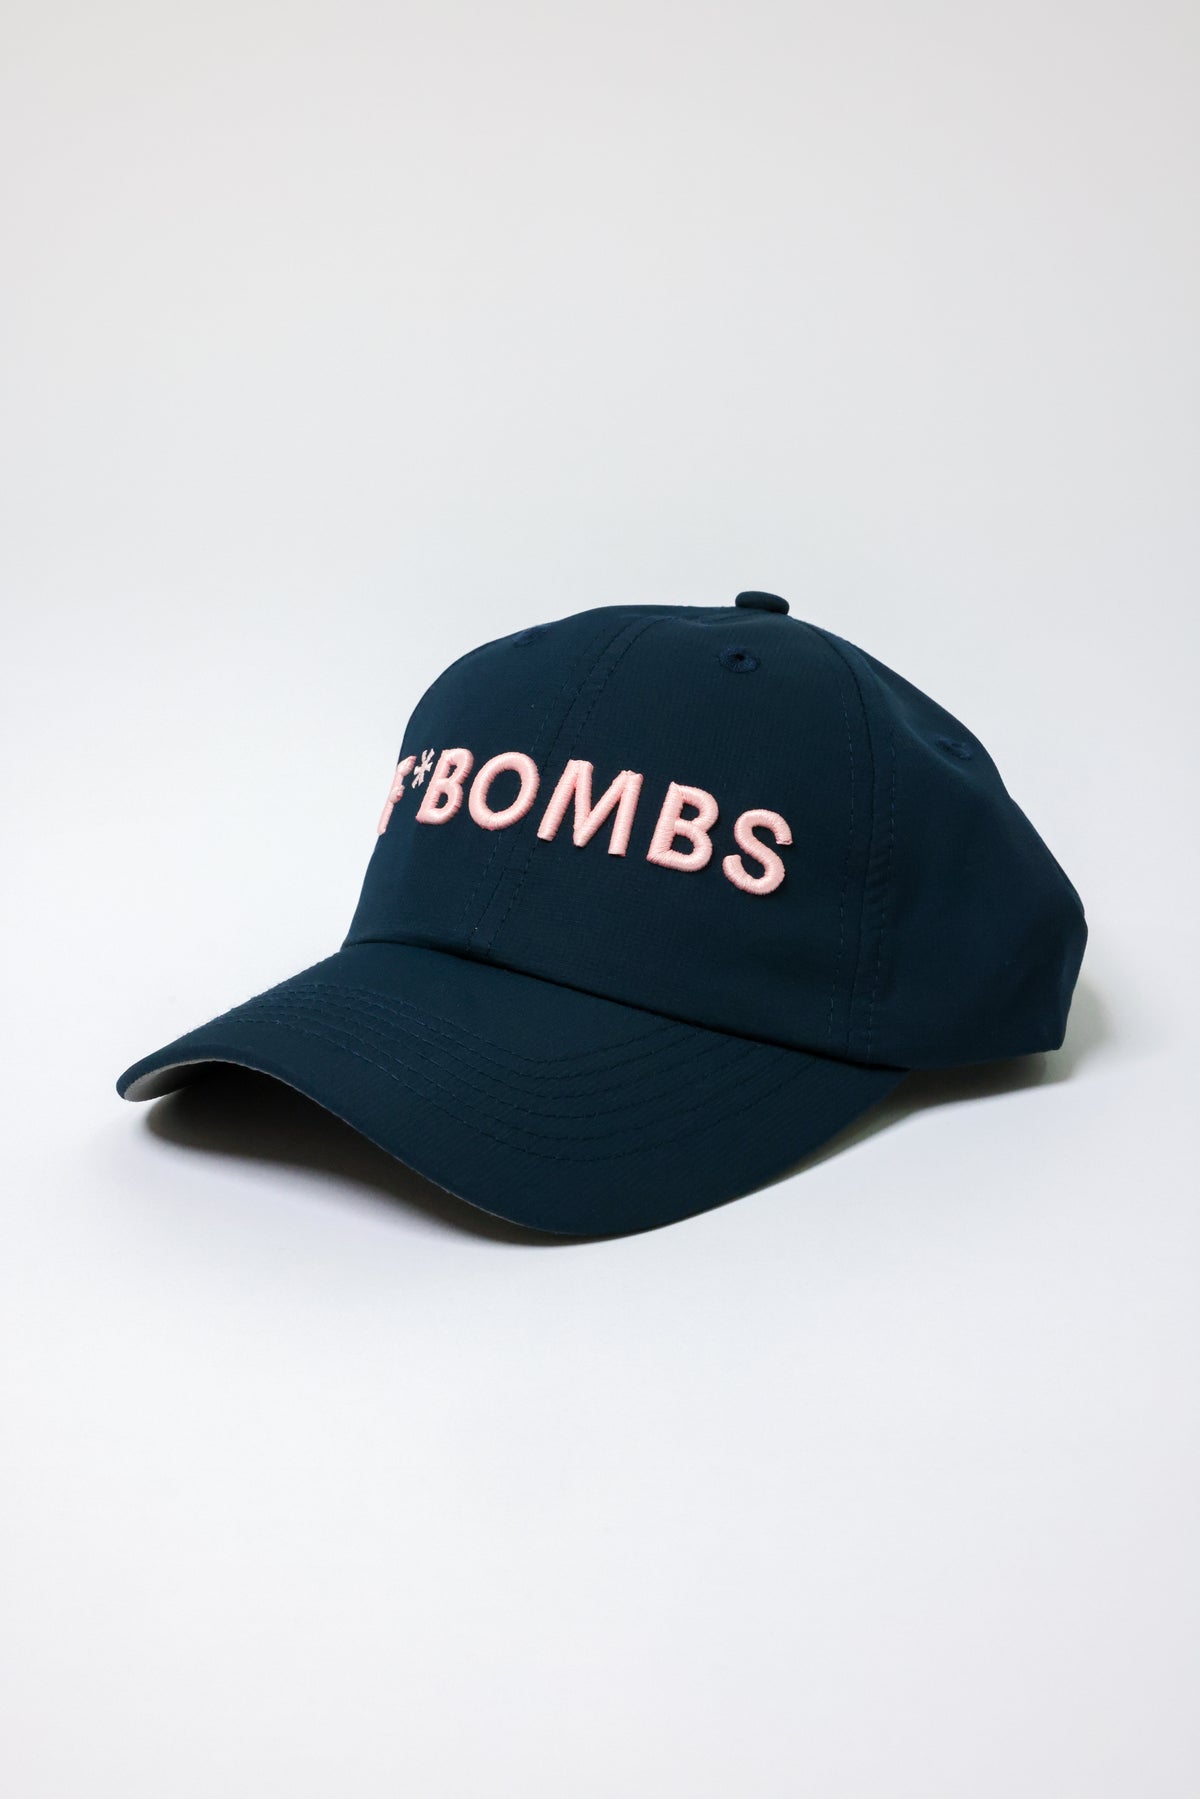 F*BOMBS True Fit Unisex Hat  *Restock May 1st*